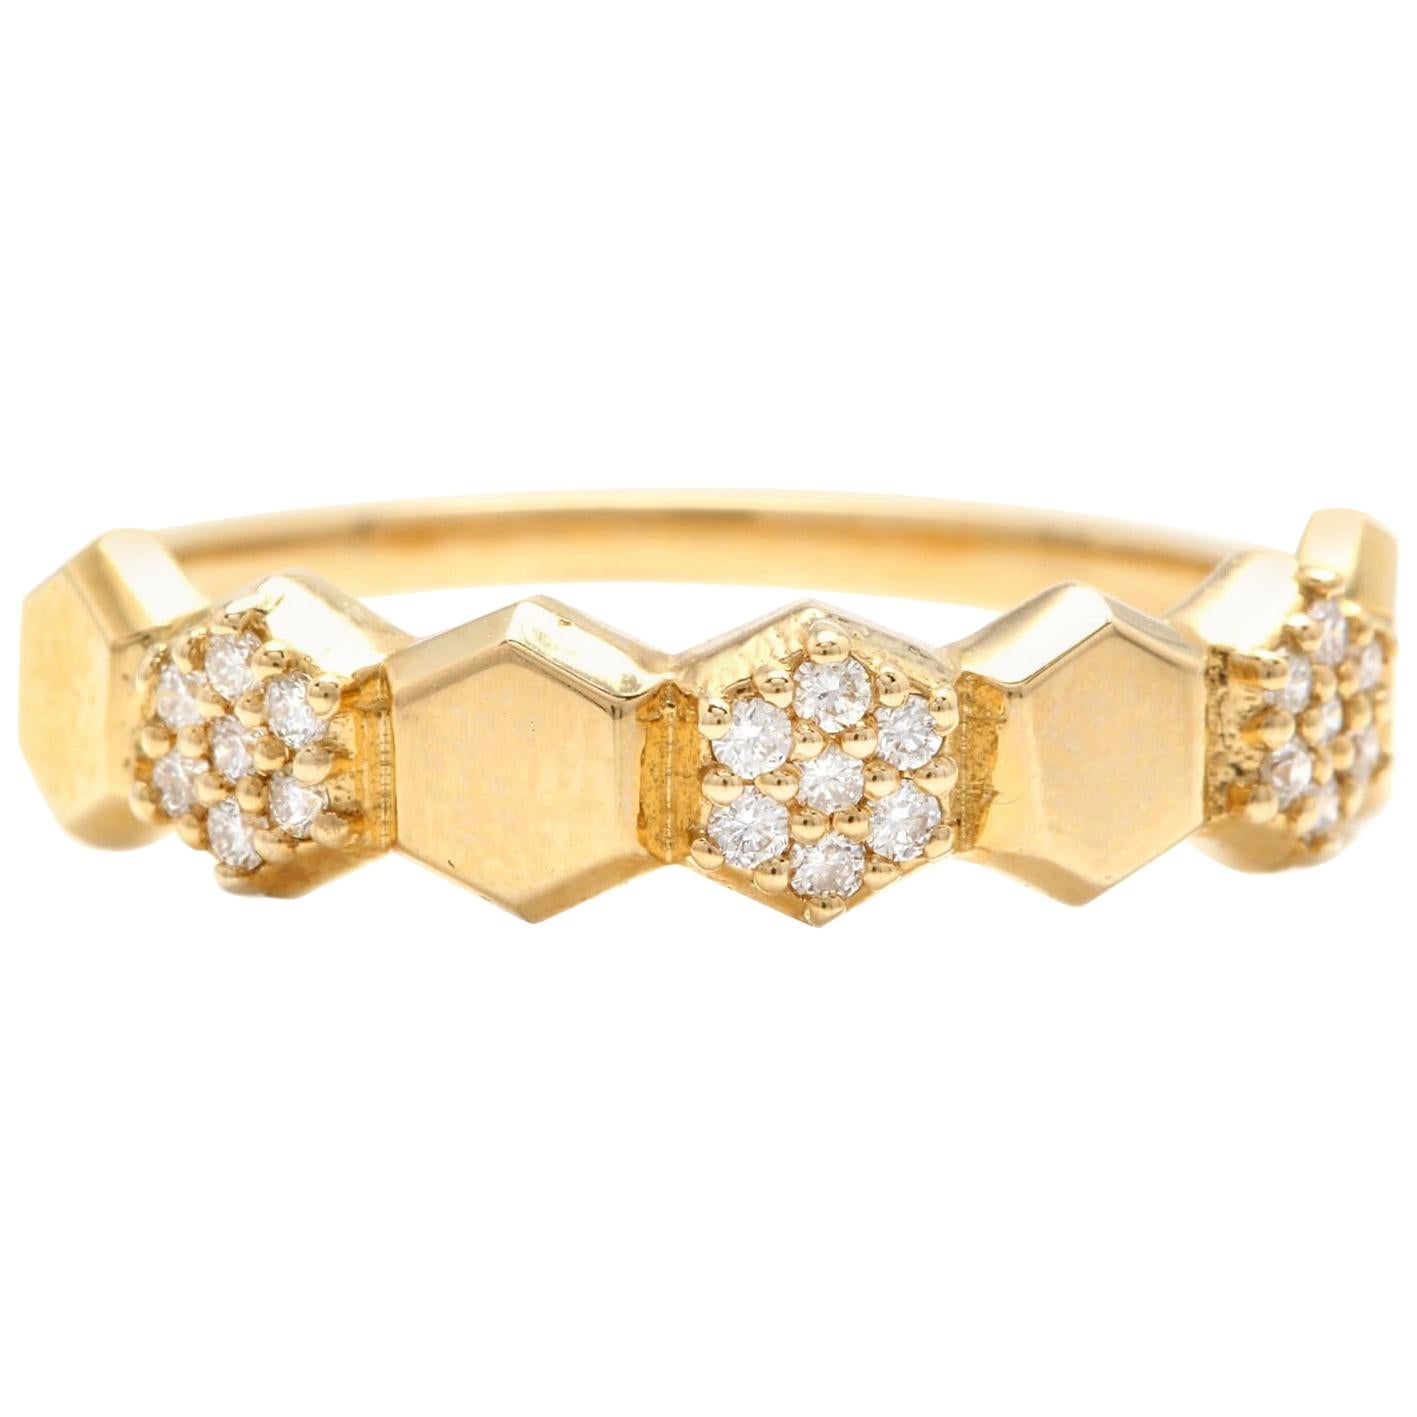 0.20 Carat Natural Diamond 14 Karat Solid Yellow Gold Band Ring